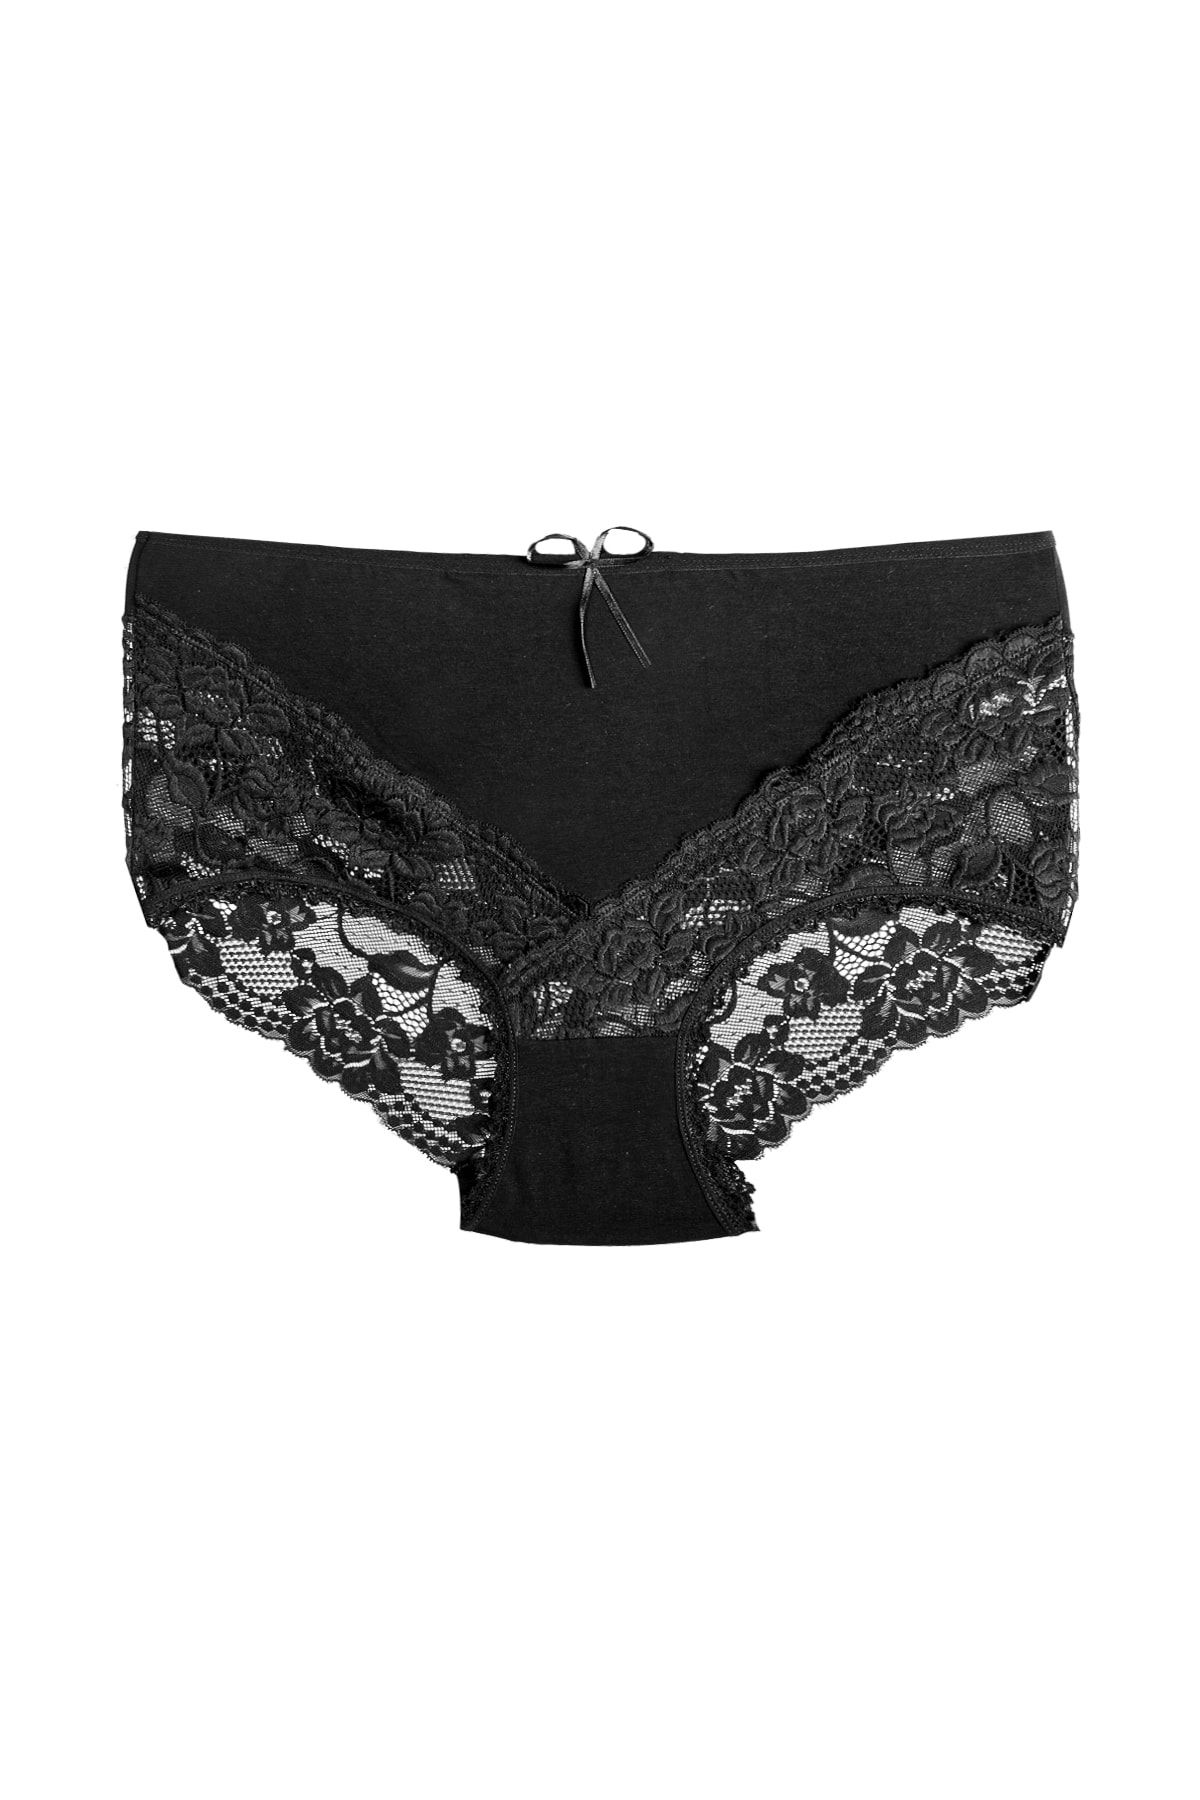 Zena Black High Waist Lace Cotton Plus Size Women's Panties - Trendyol